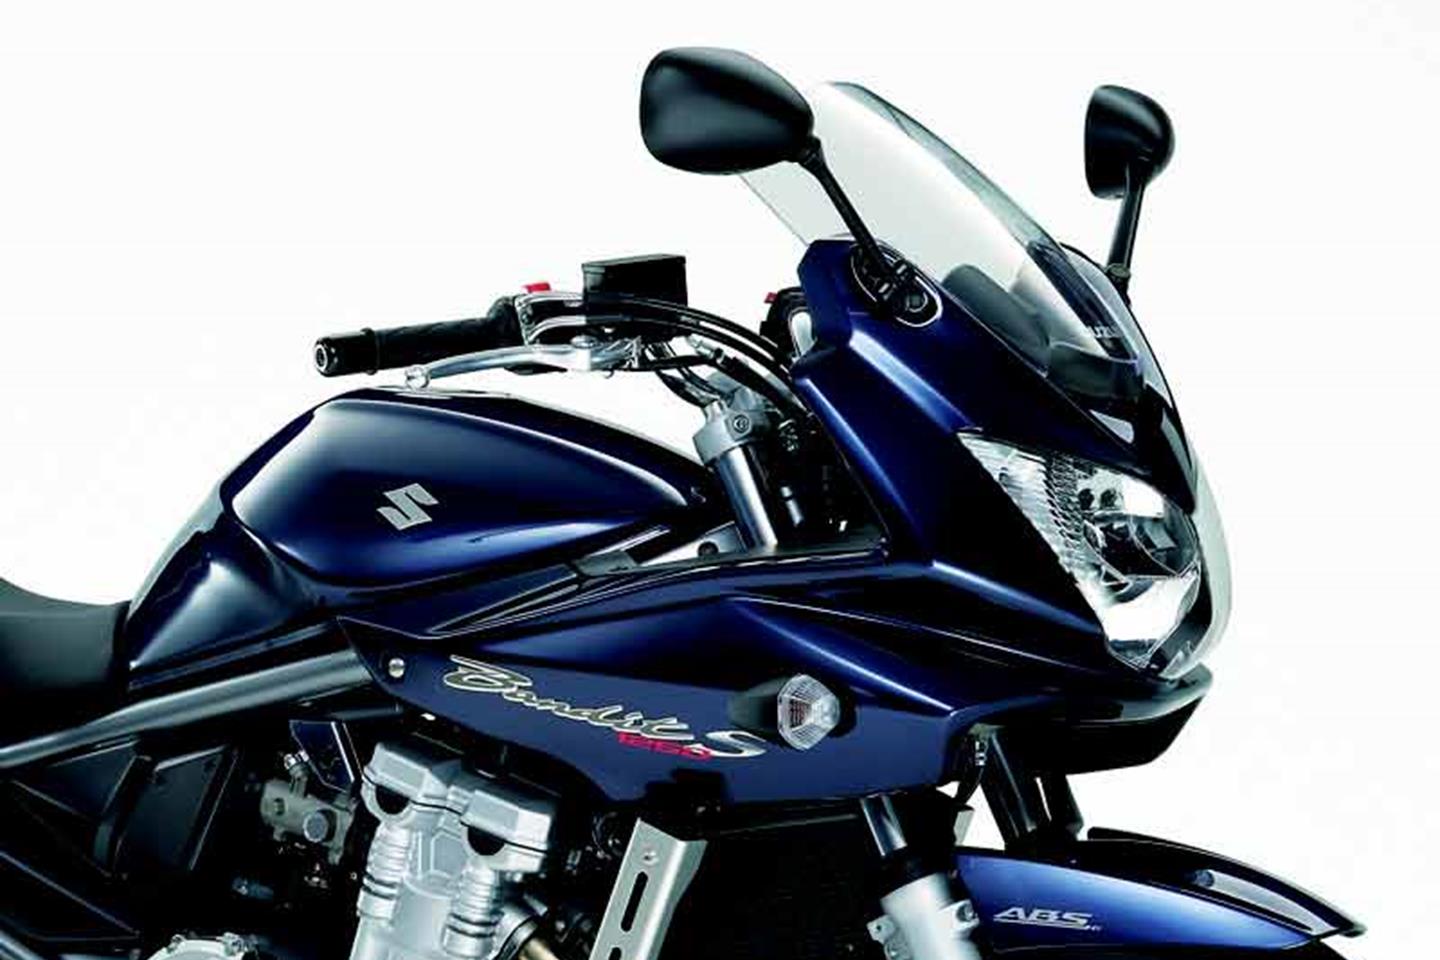 SUZUKI GSF1250 BANDIT (2007-2012) Motorcycle Review